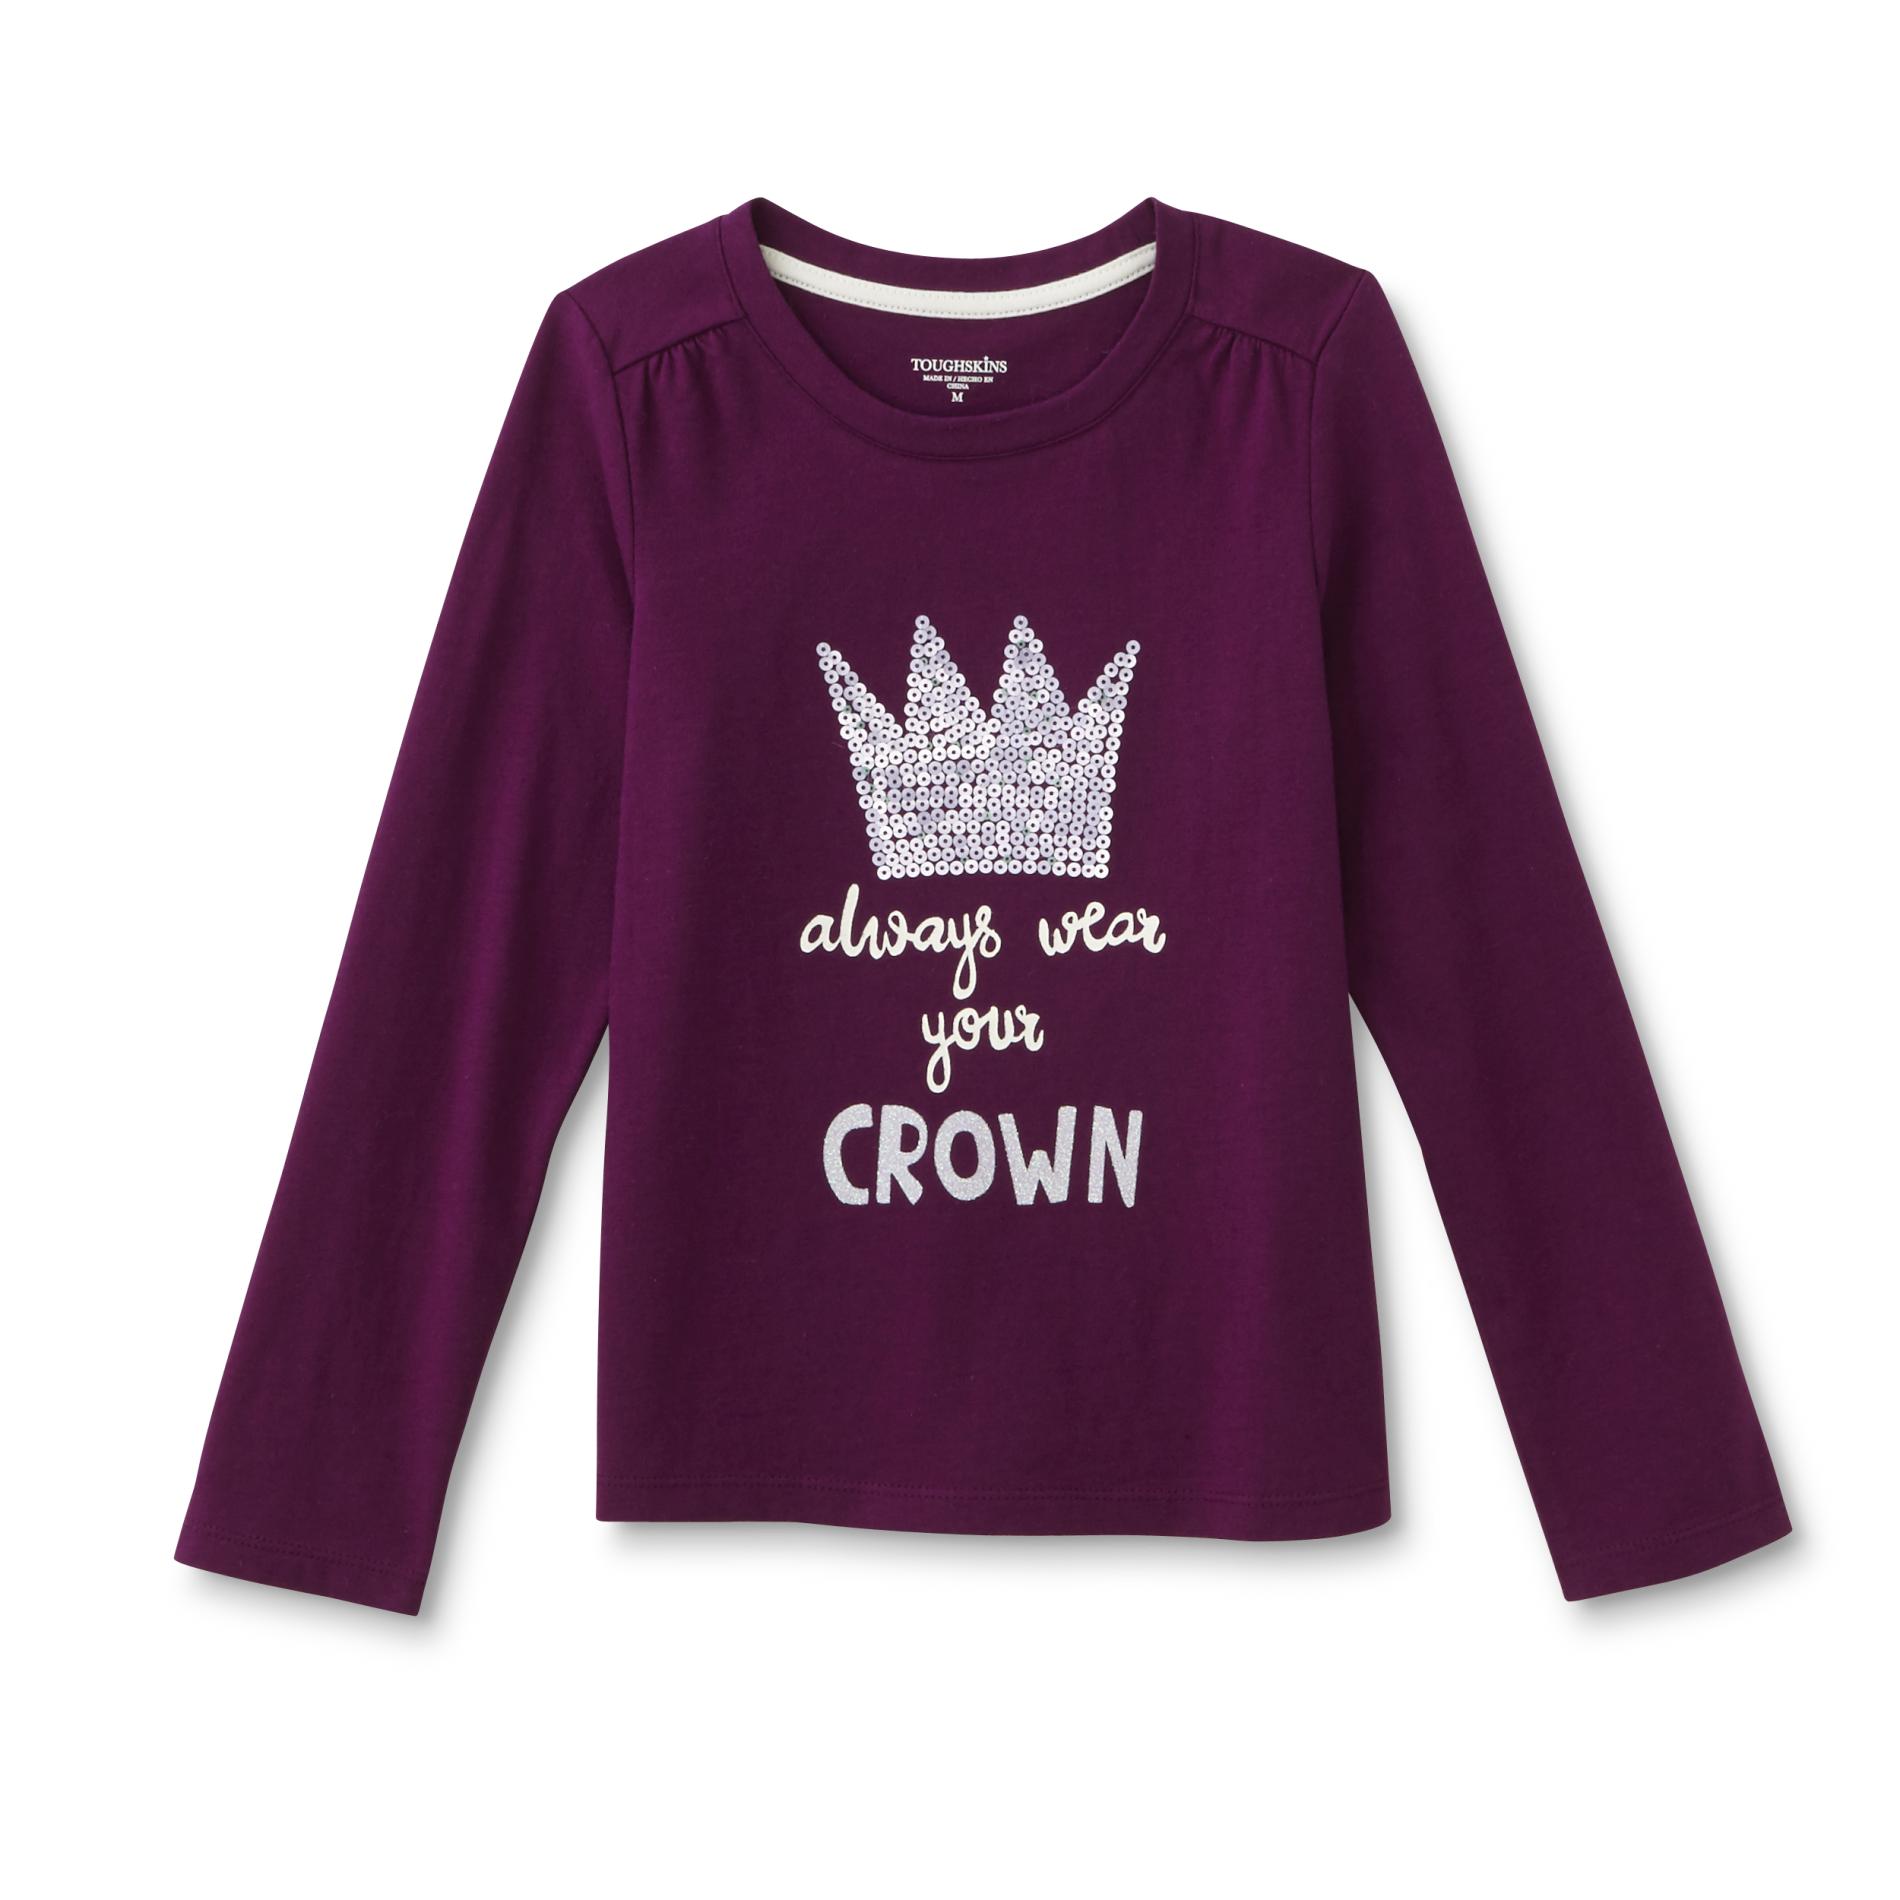 Toughskins Girl's Long-Sleeve Top - Crown